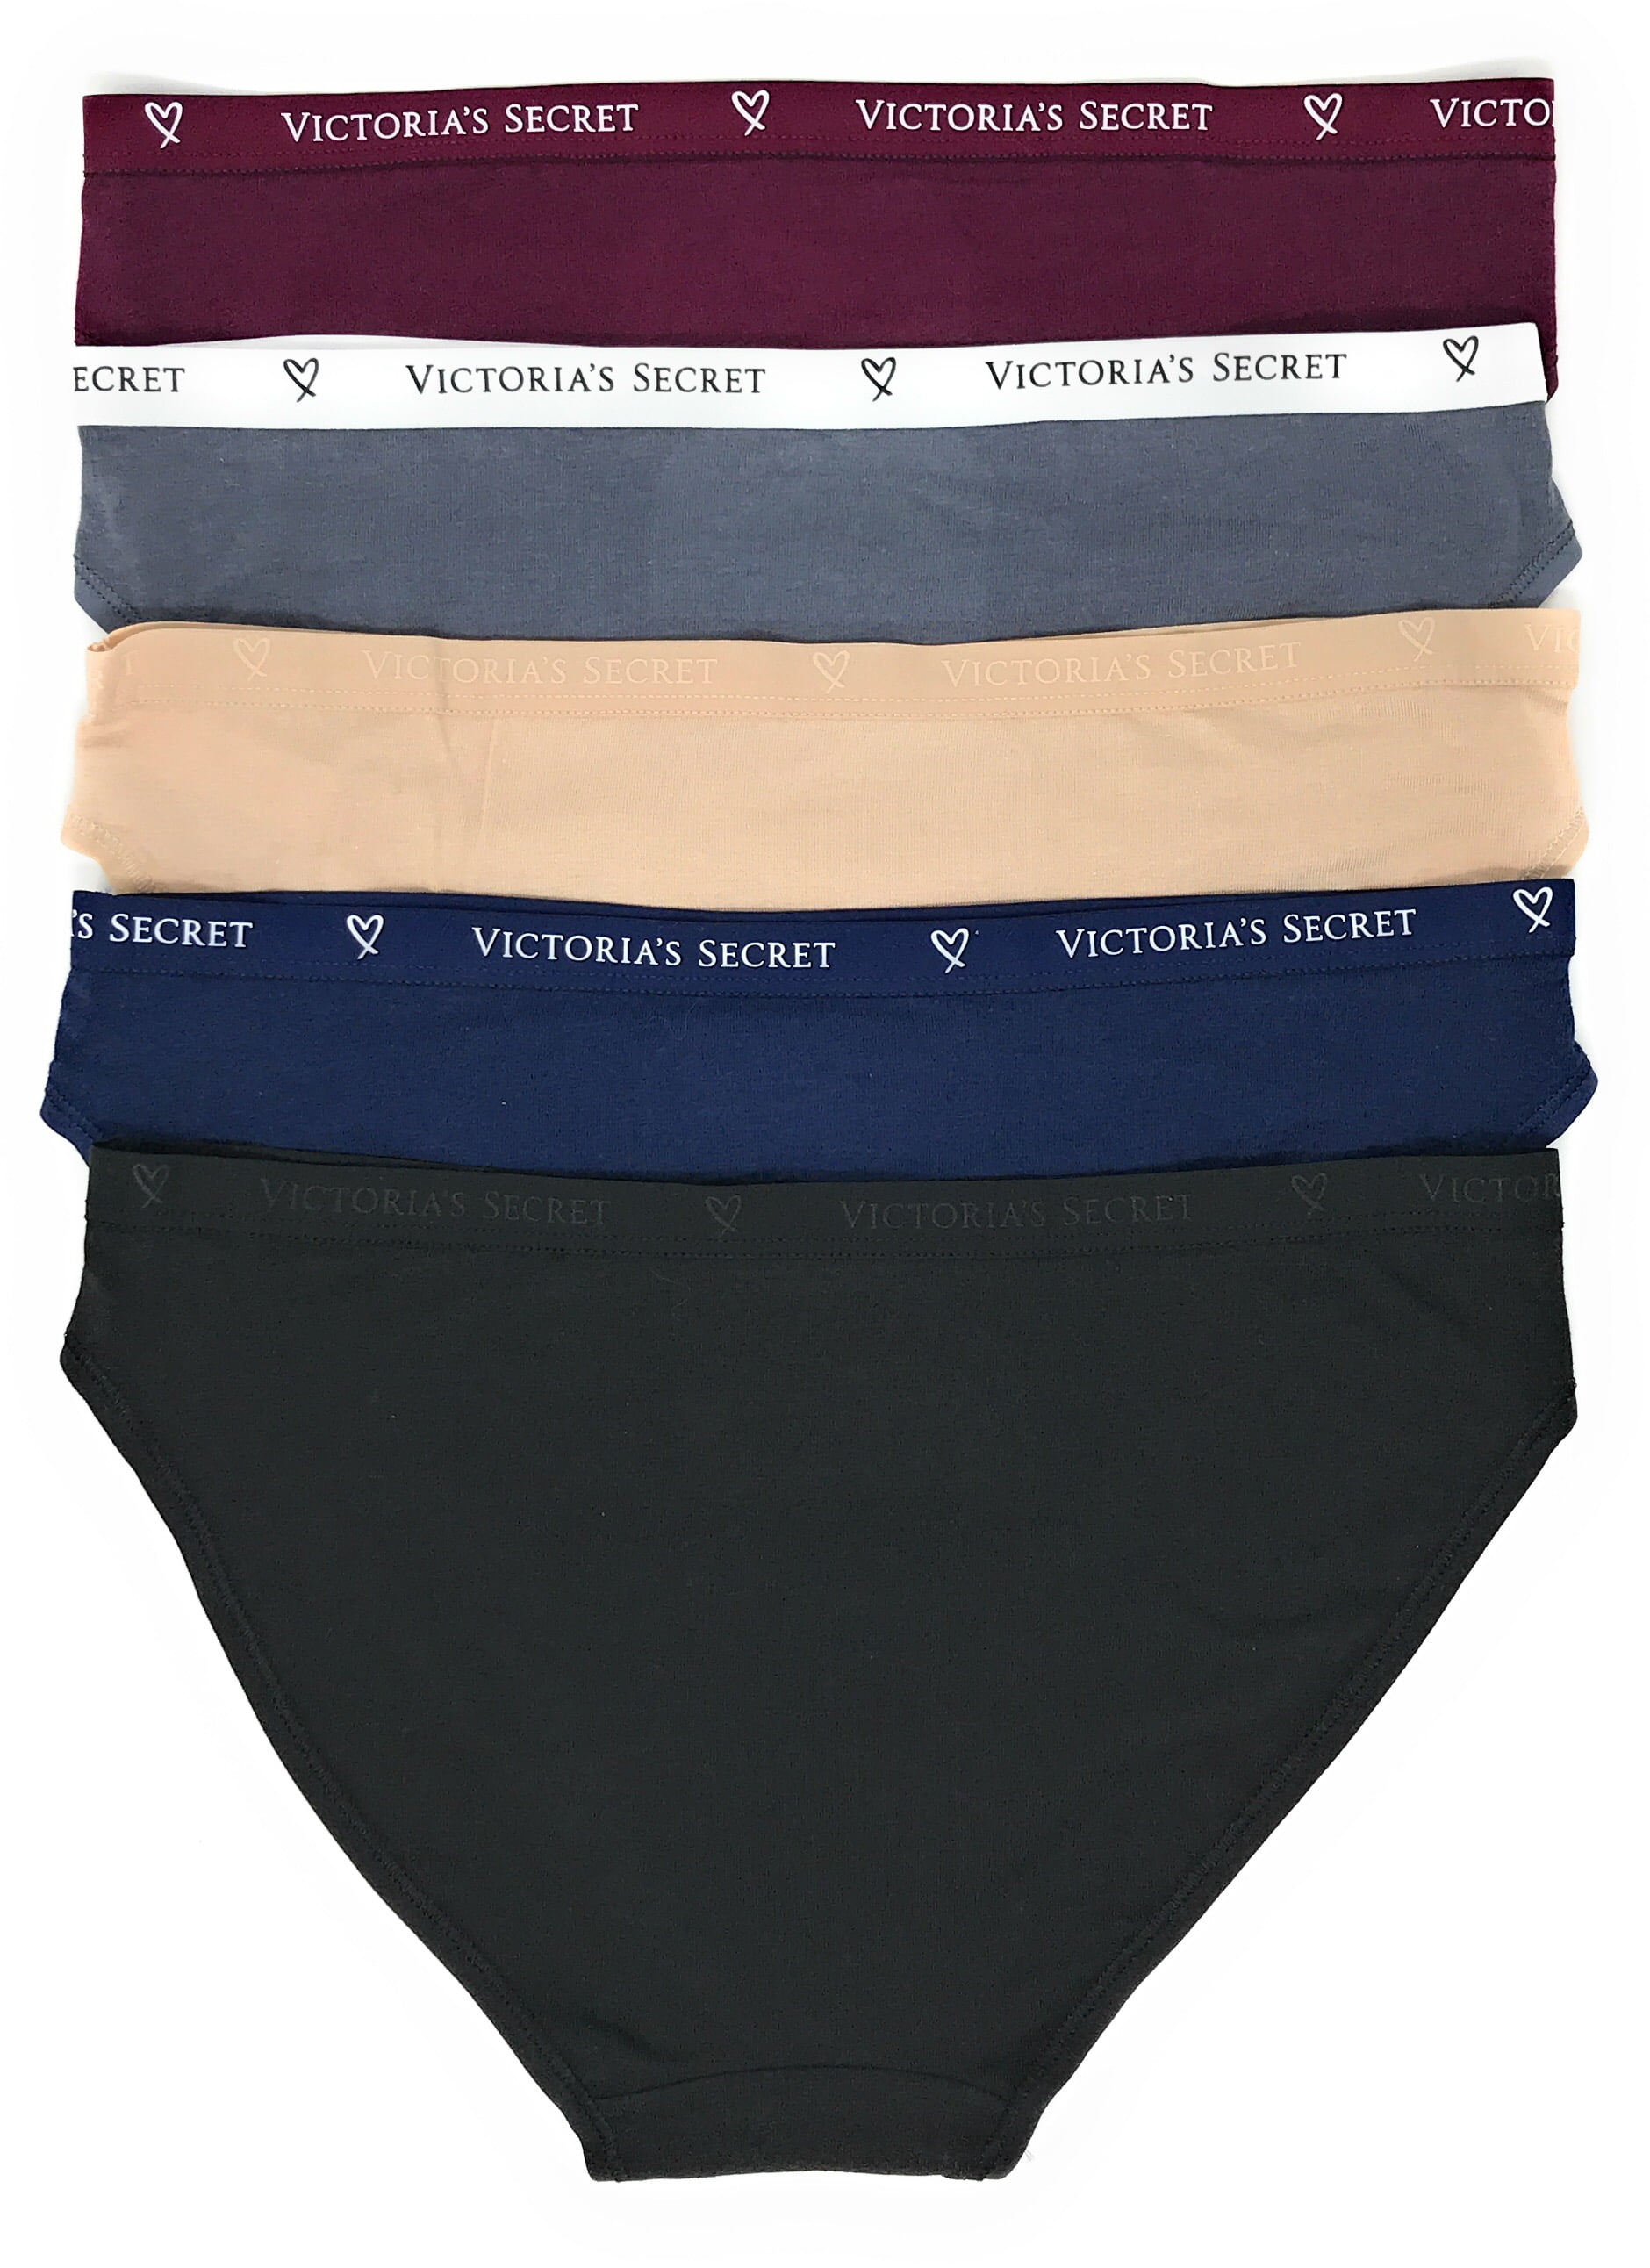 Victoria's Secret Underwear, Apparel Is Stuck on 100 Ships at Sea